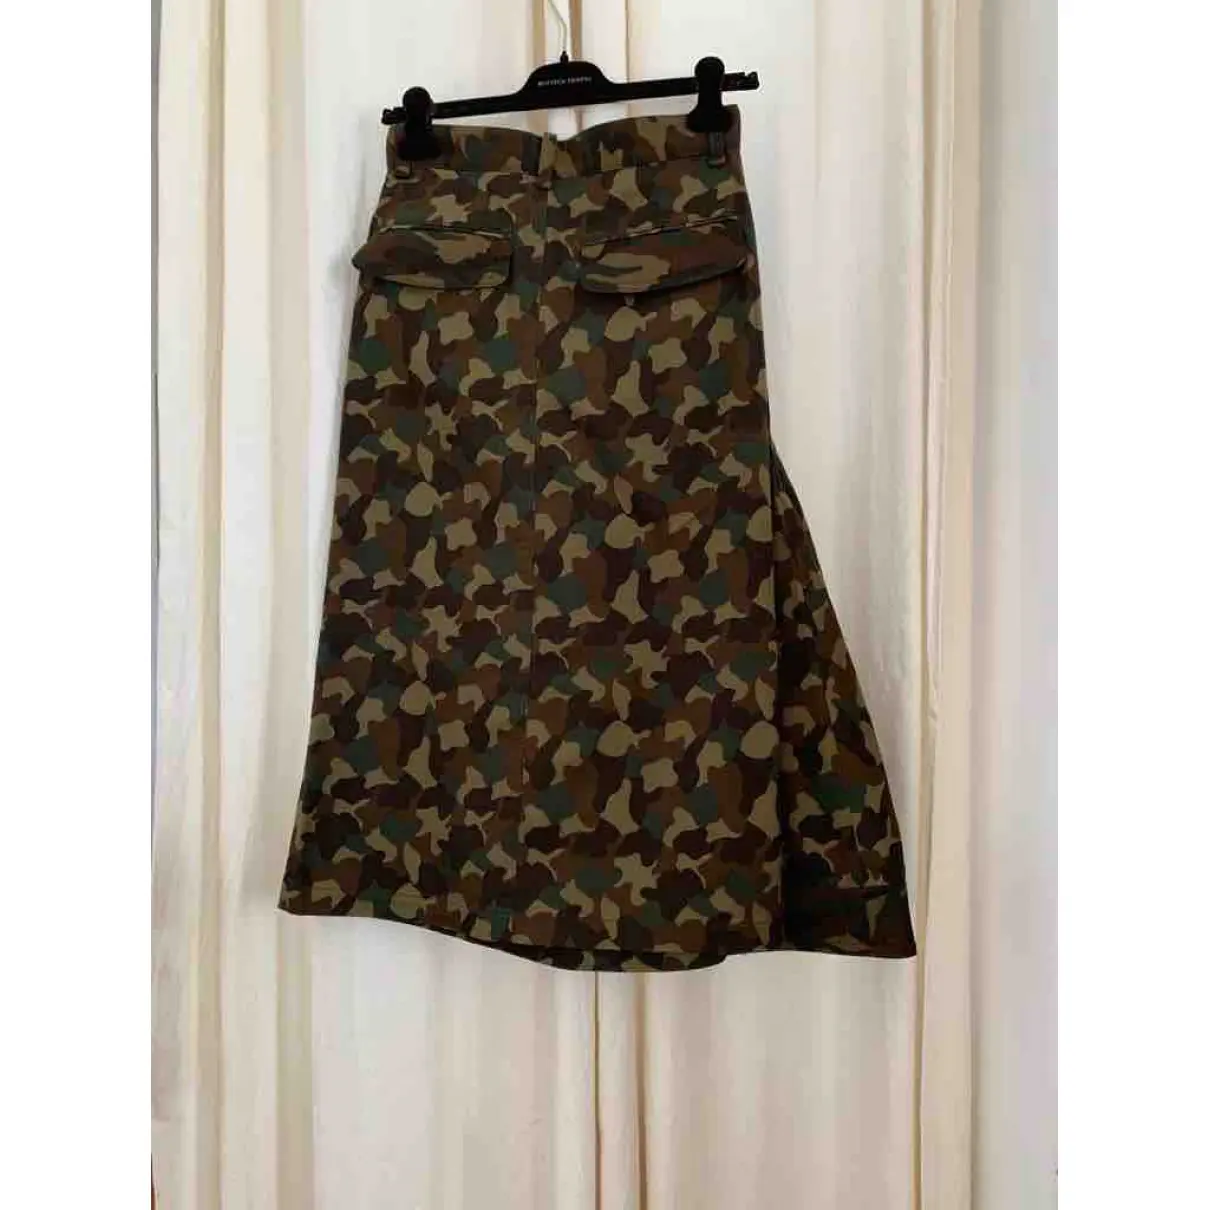 Buy Yohji Yamamoto Skirt online